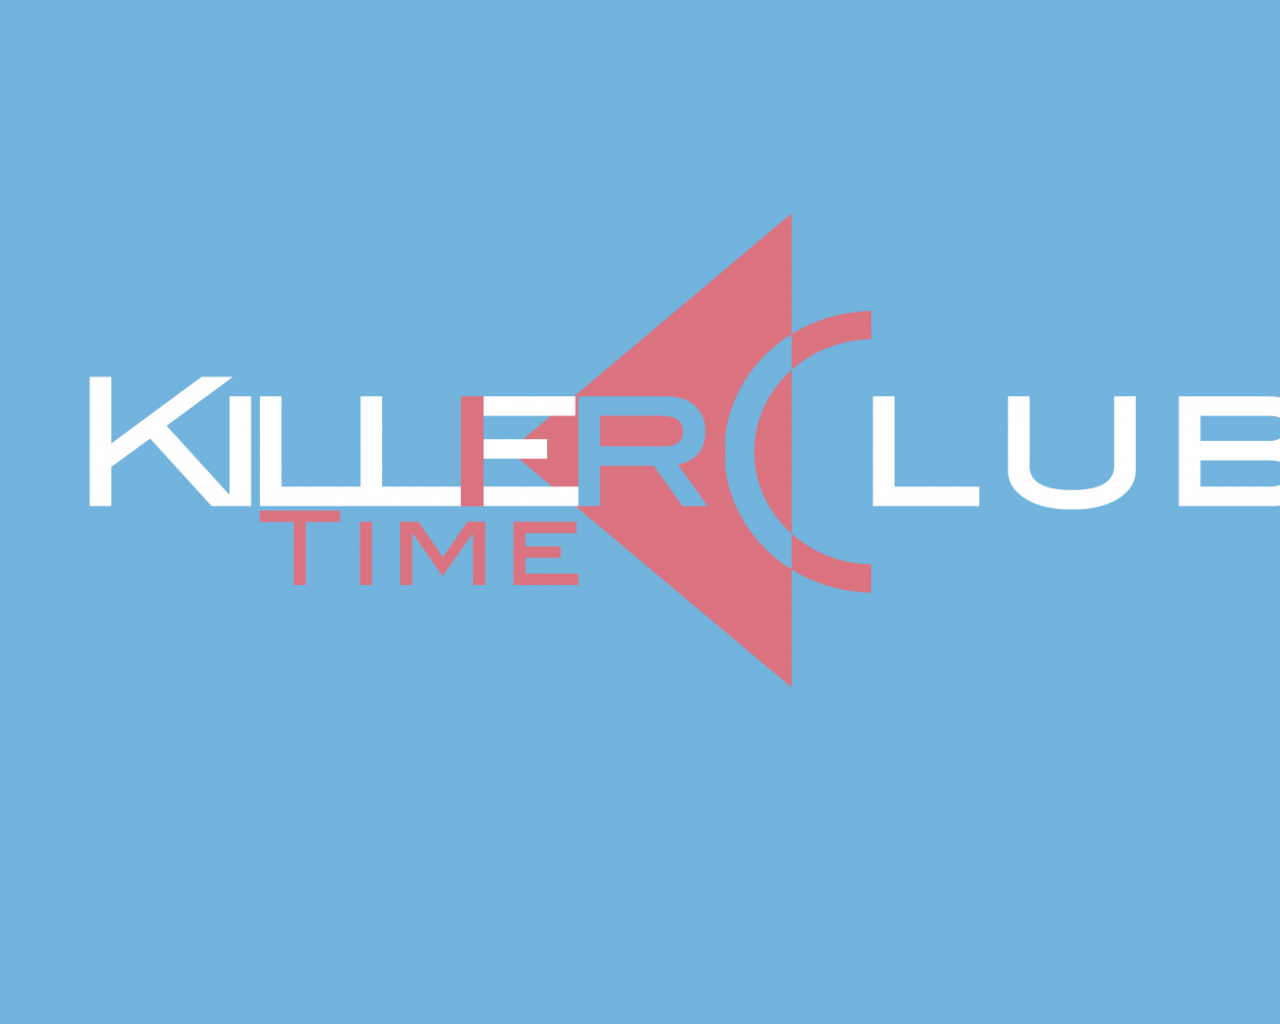 killer, время, минимализм, club, клуб, убийцы, убийца, time